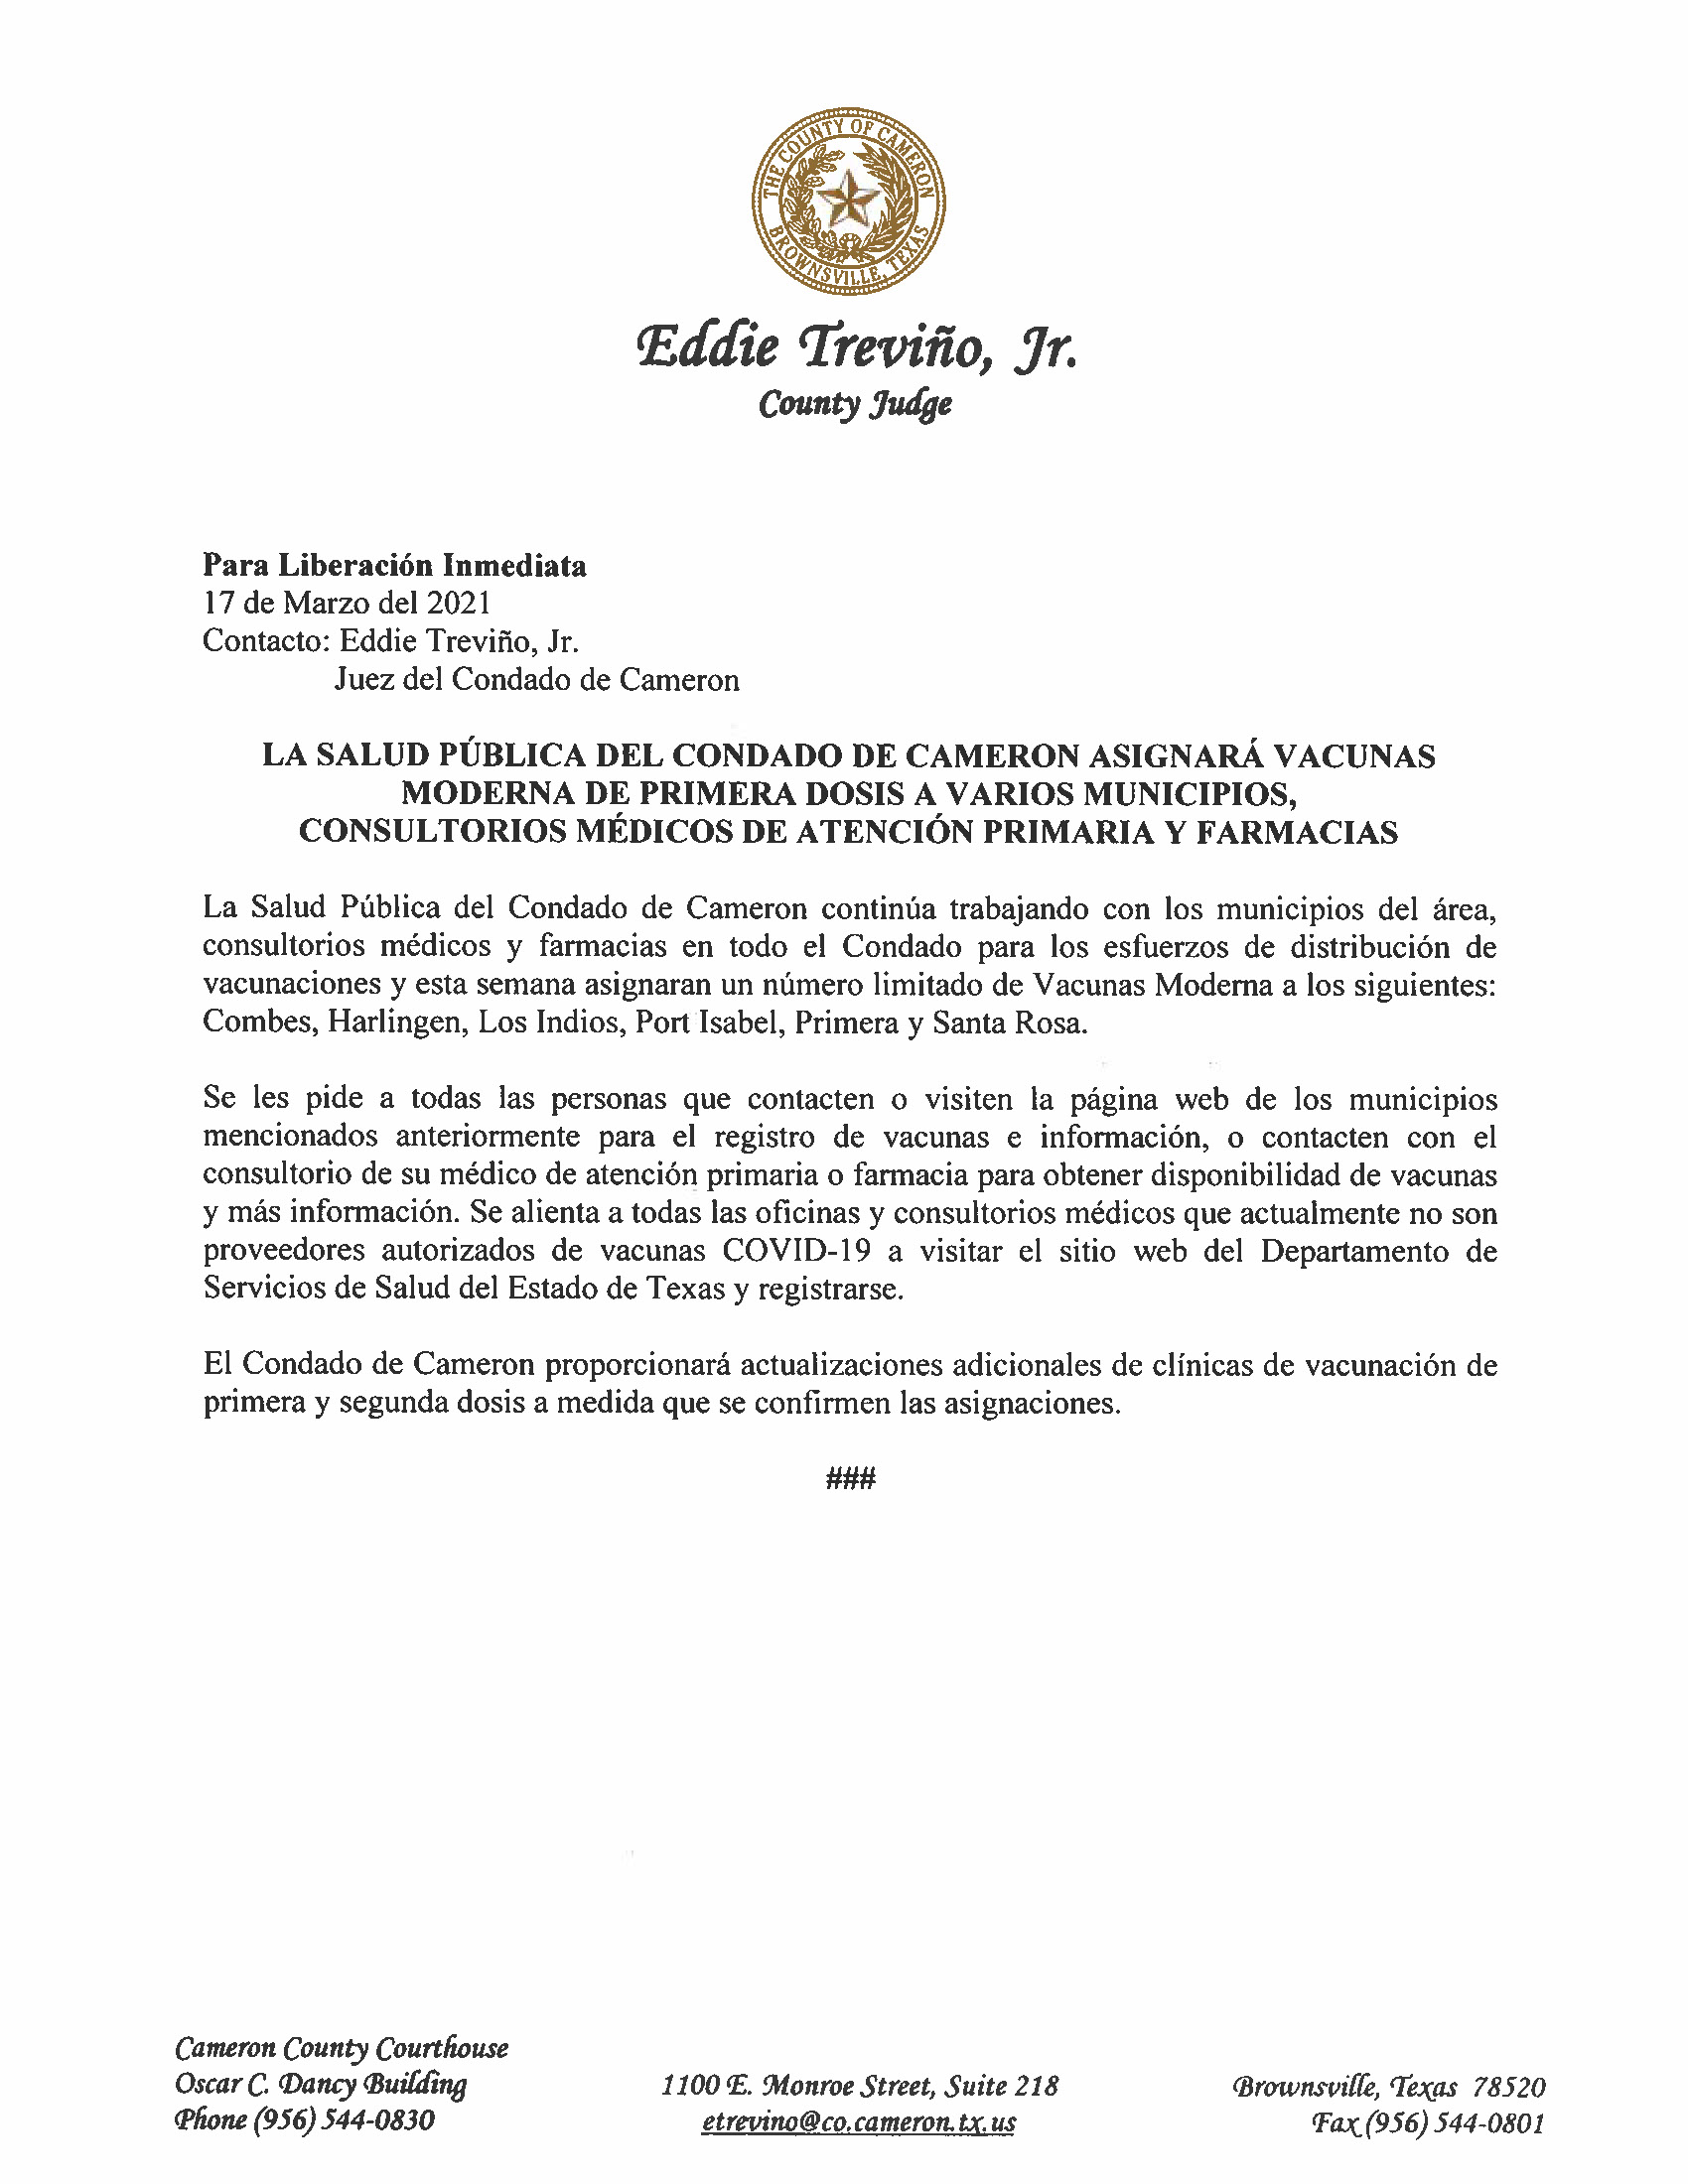 3.17.21 CCPH Asignara Vacunas Moderna A Municipios Consultorios Medicos Y Farmacias